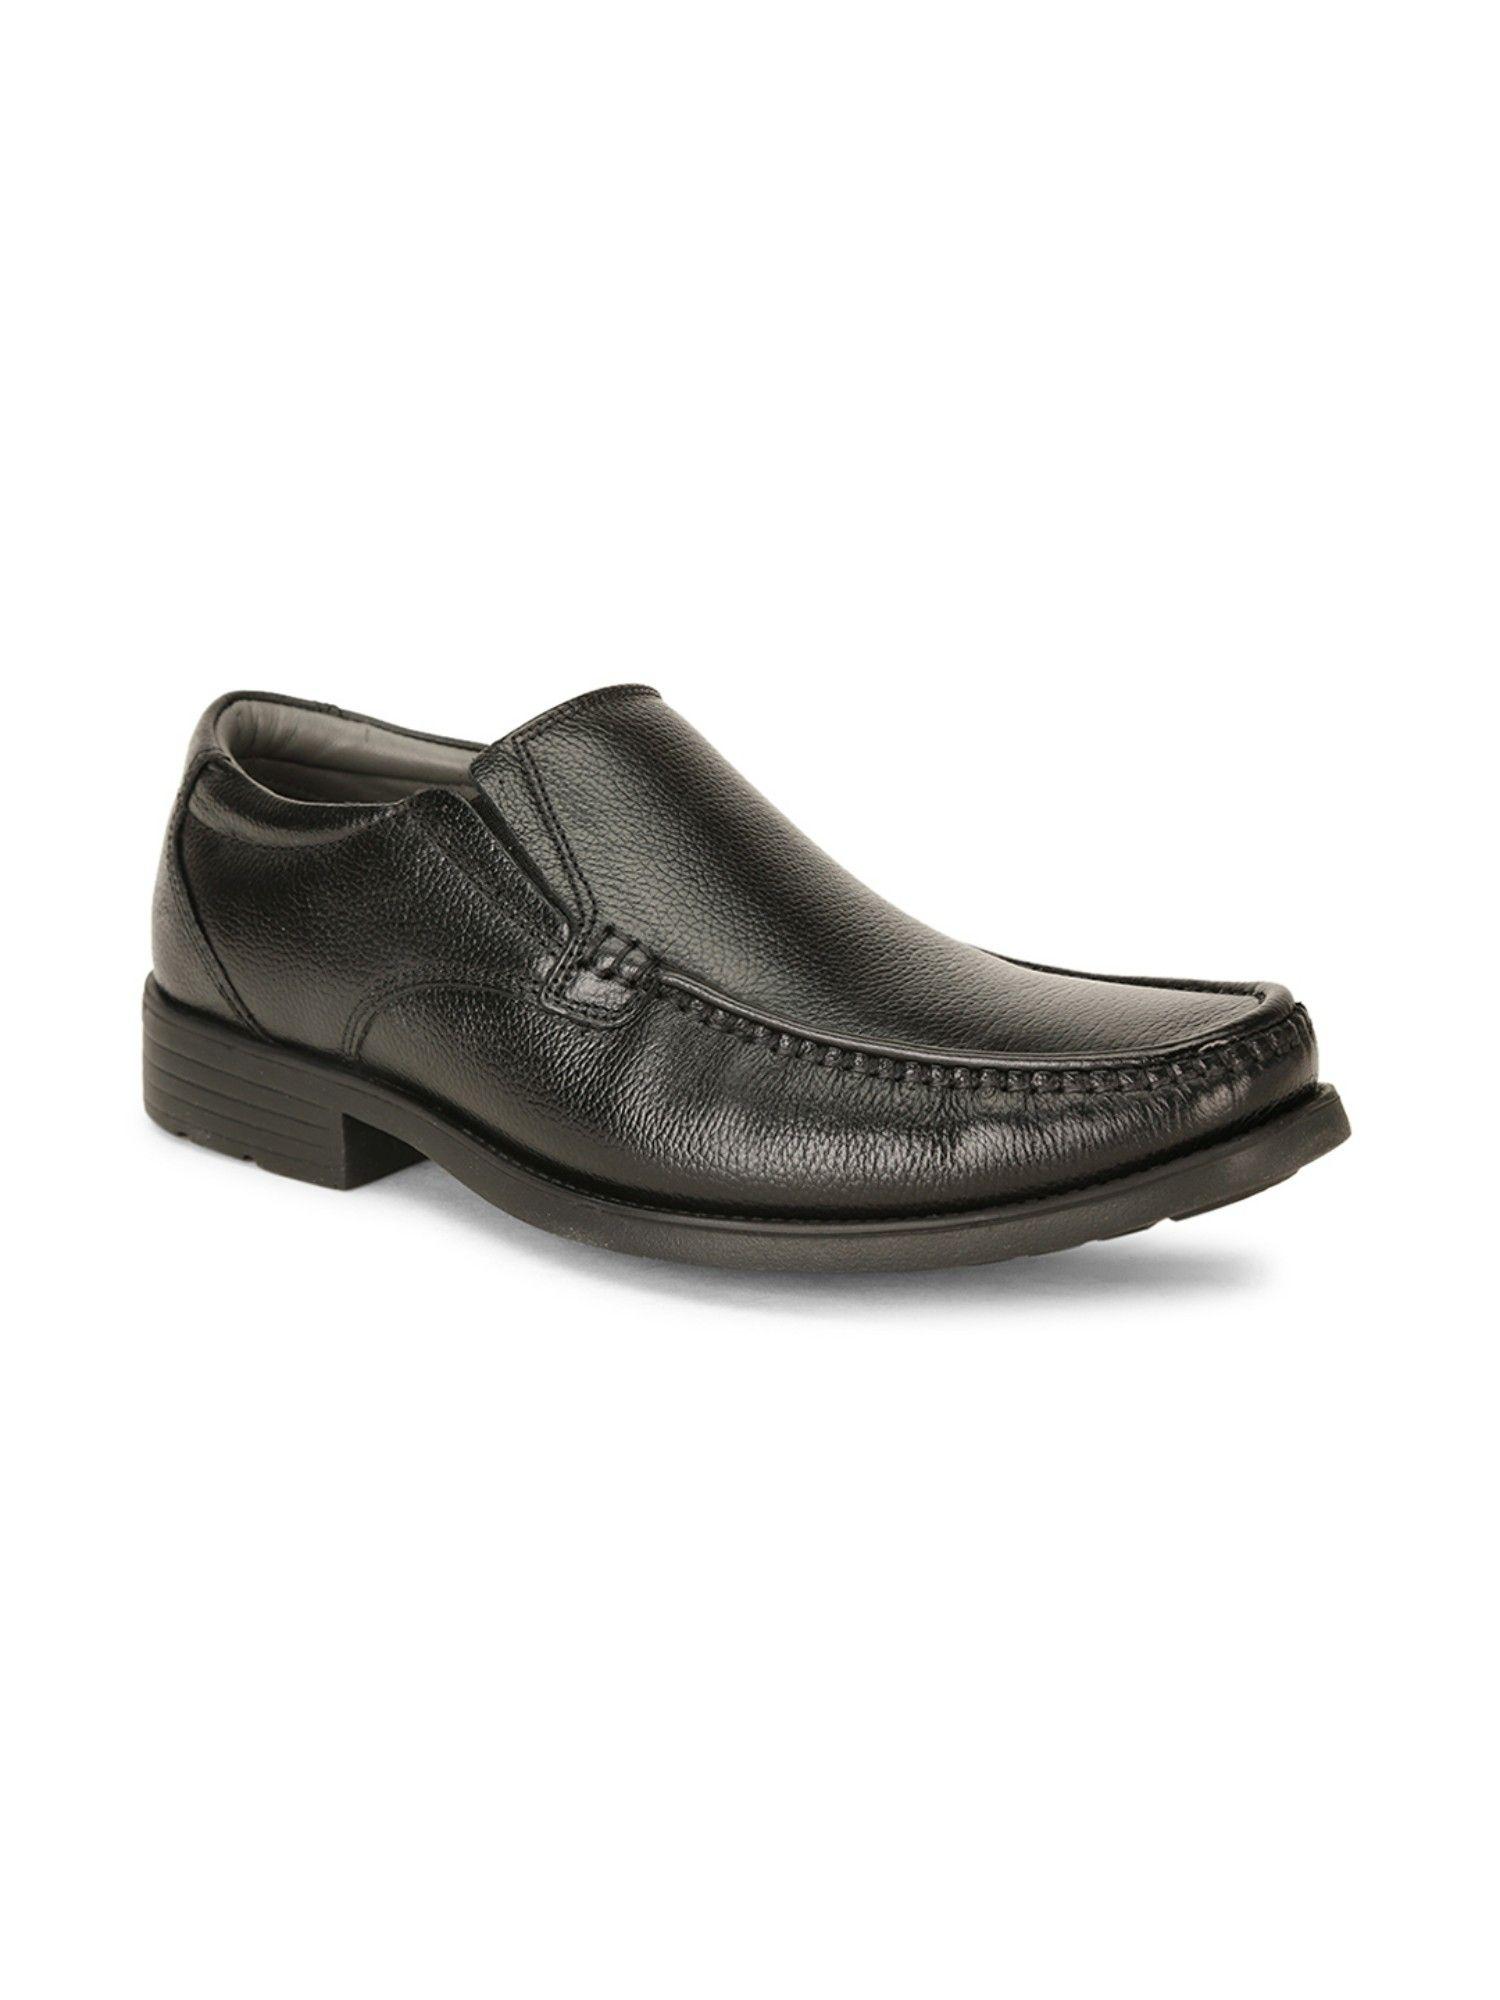 mocca zero g loafers for men (black)